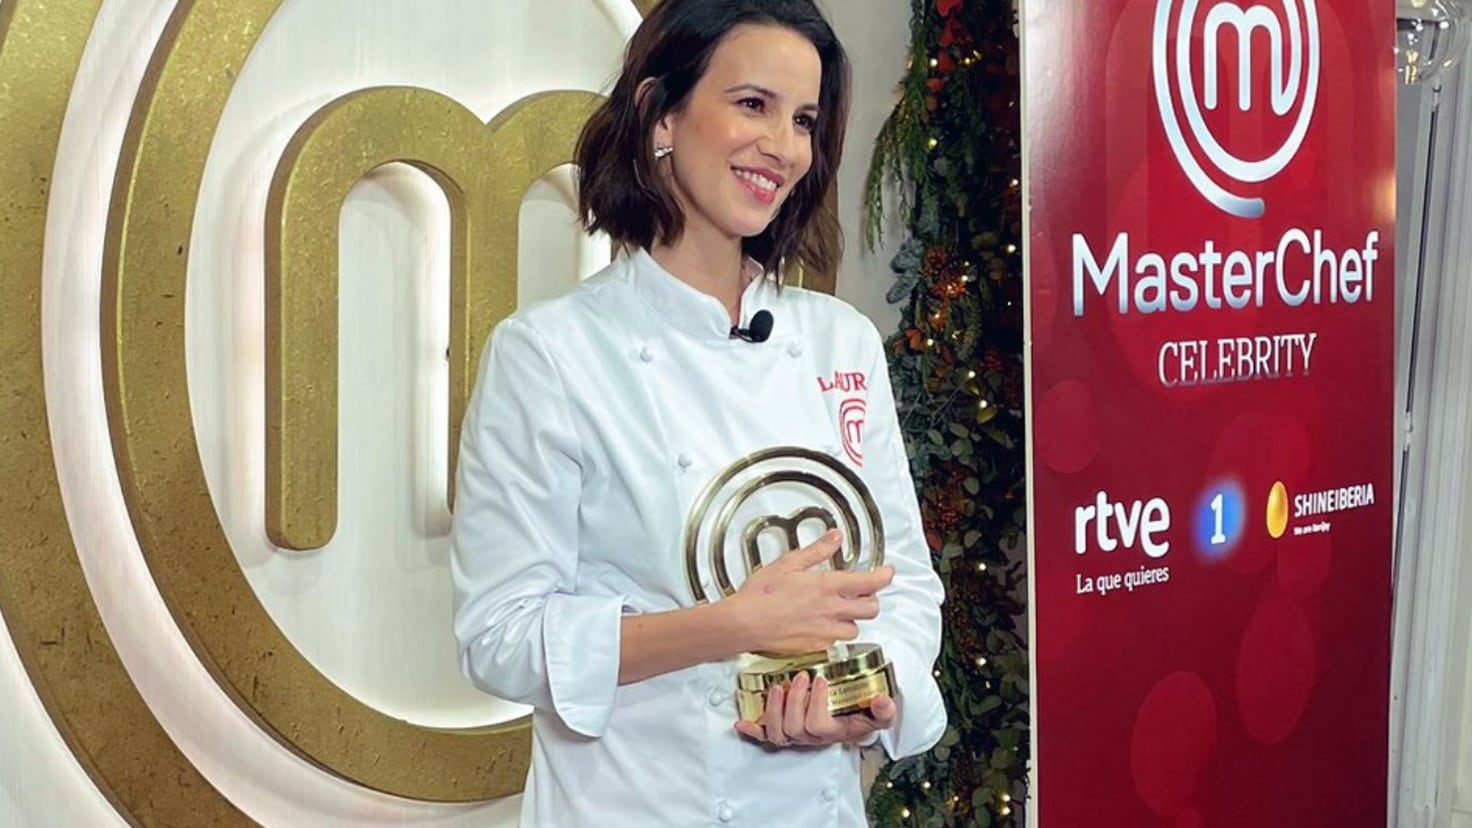 Laura Londoo, winner of MasterChef: Prepare the menu for the final at the Celler de Can Roca
